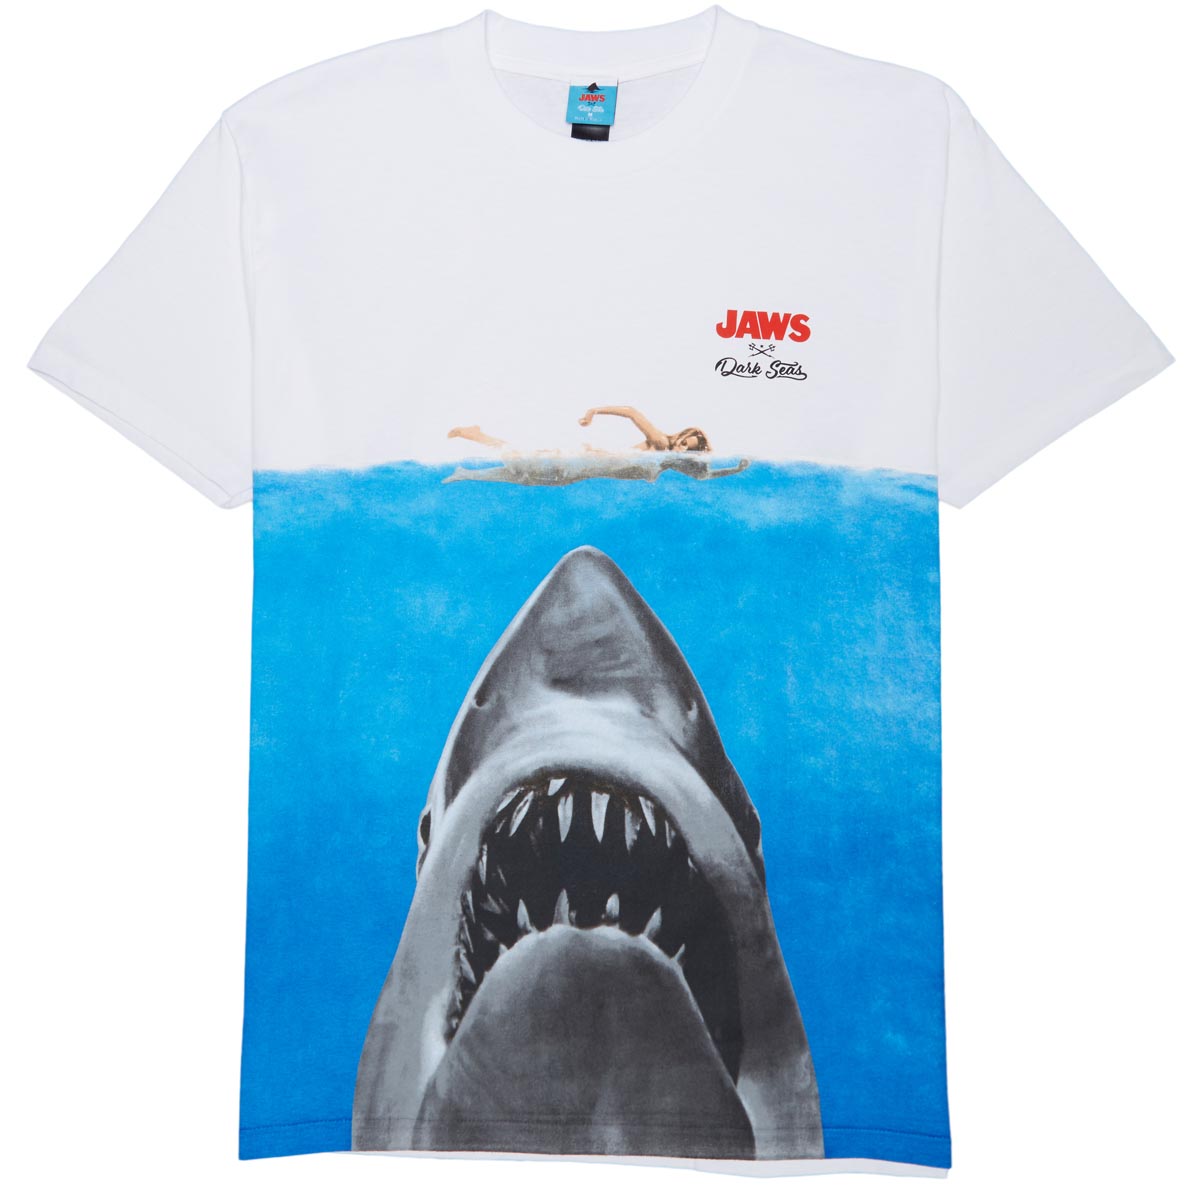 Dark Seas x Jaws Movie Poster T-Shirt - White image 1